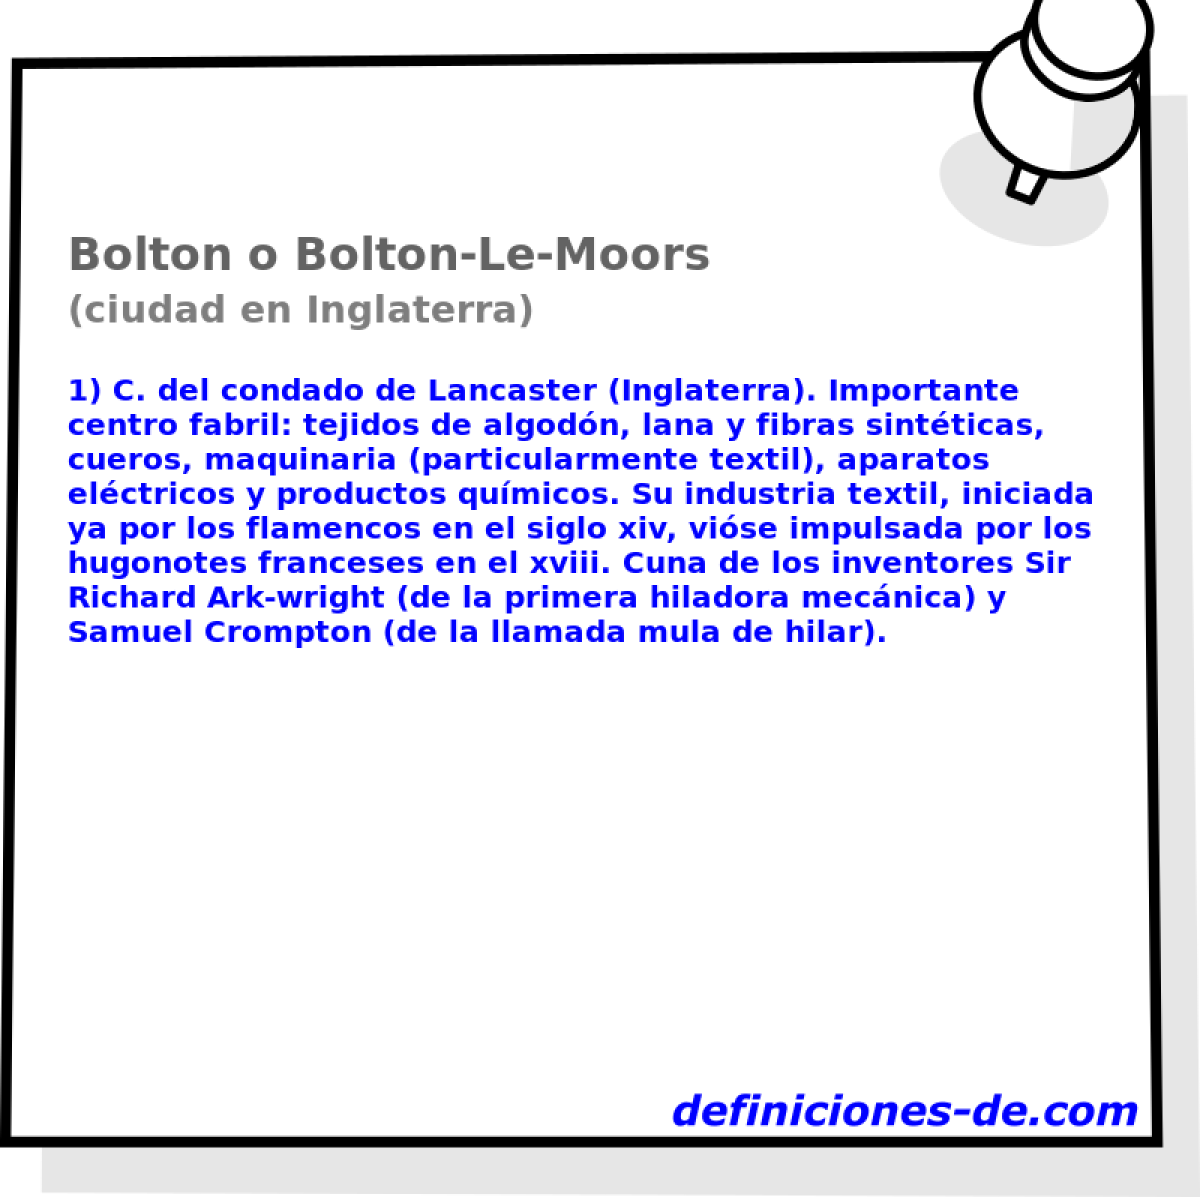 Bolton o Bolton-Le-Moors (ciudad en Inglaterra)